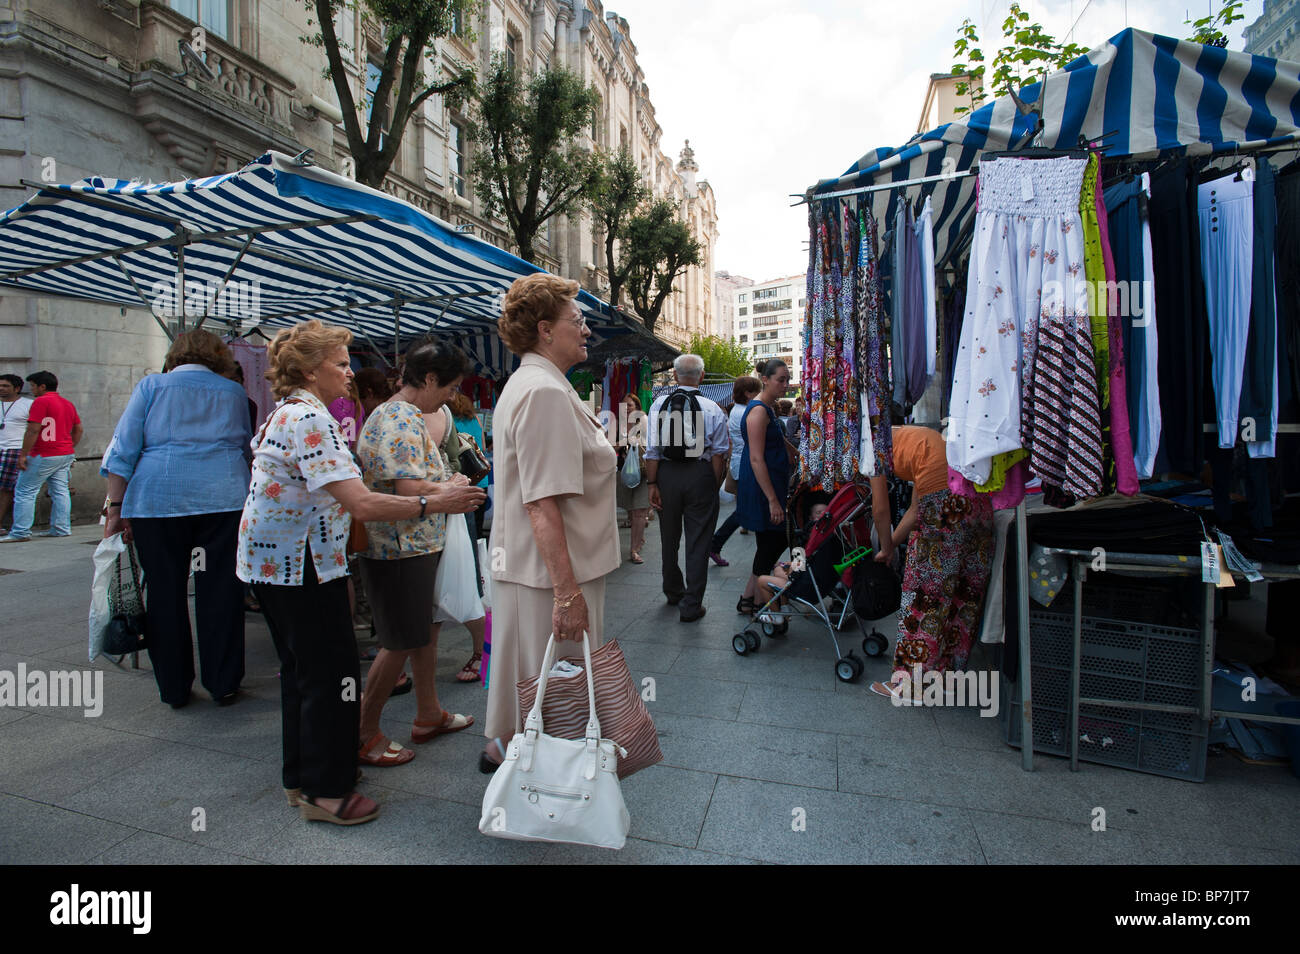 Mercado callejero espaã±a fotografías e imágenes de alta resolución - Alamy